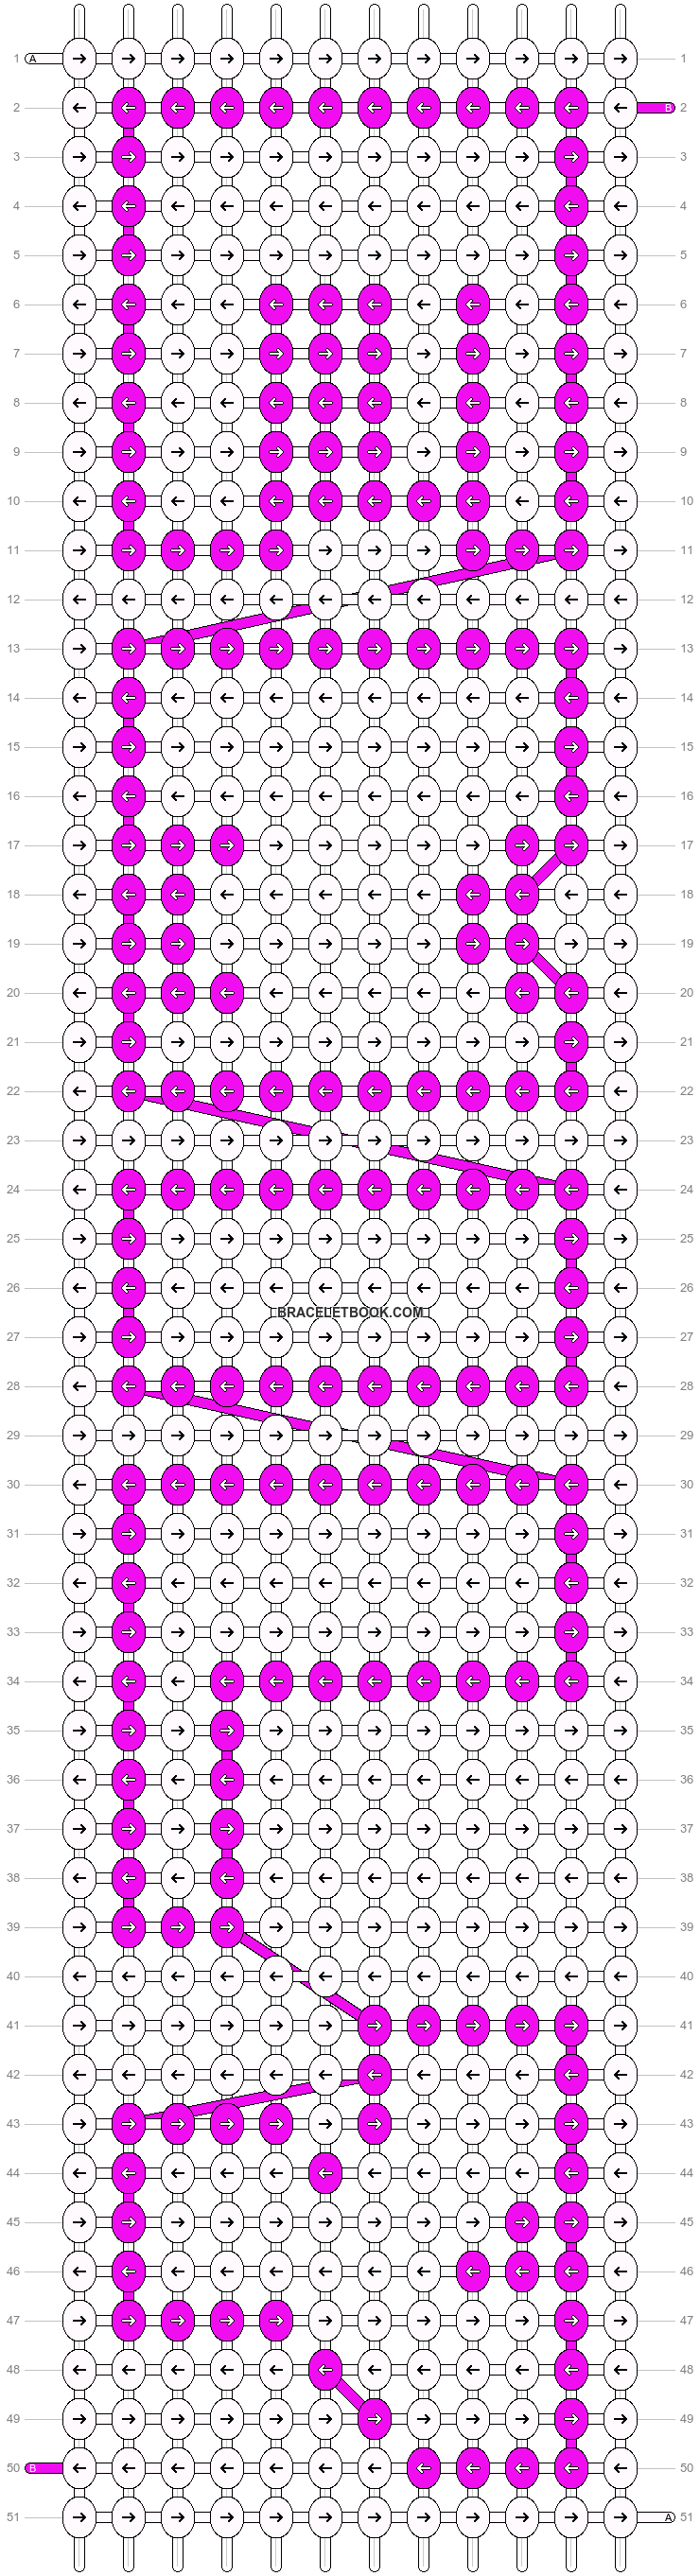 Alpha pattern #6045 pattern